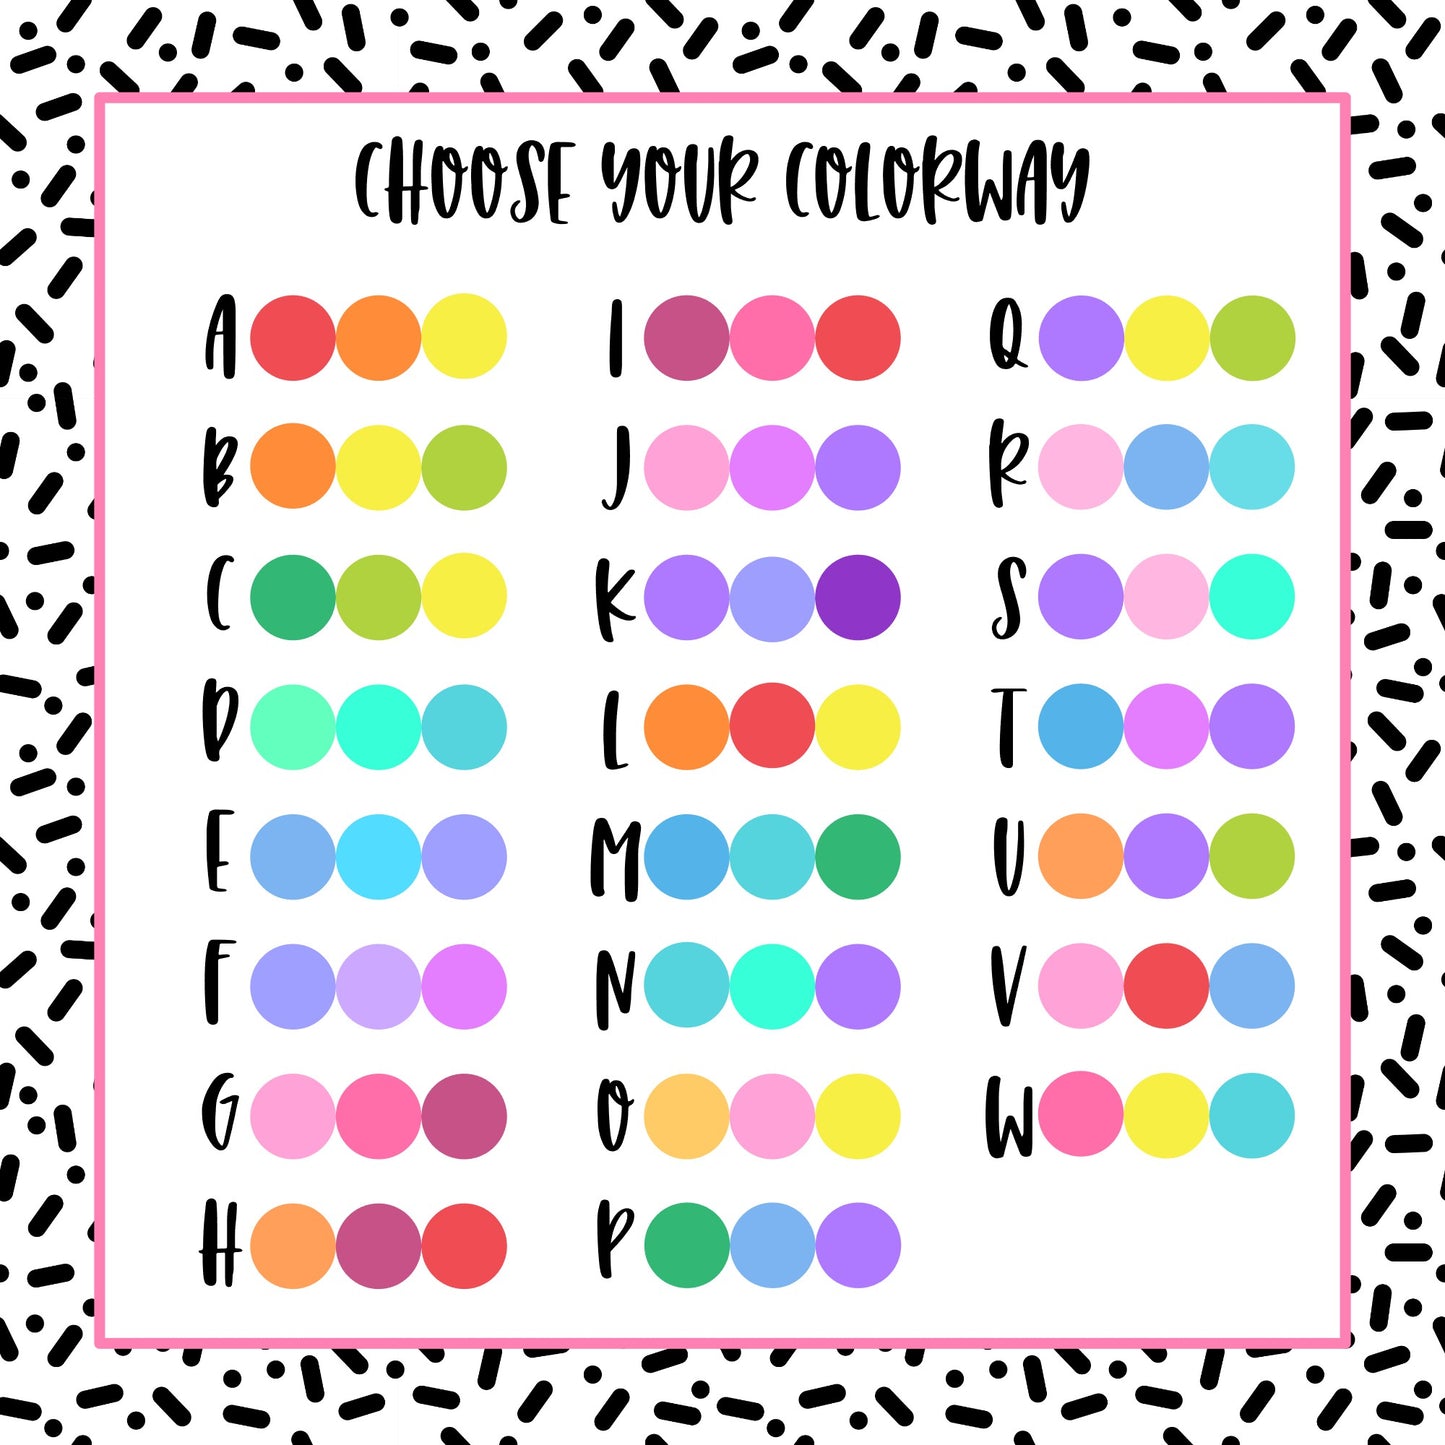 Bright Square Boxes - 23 color options